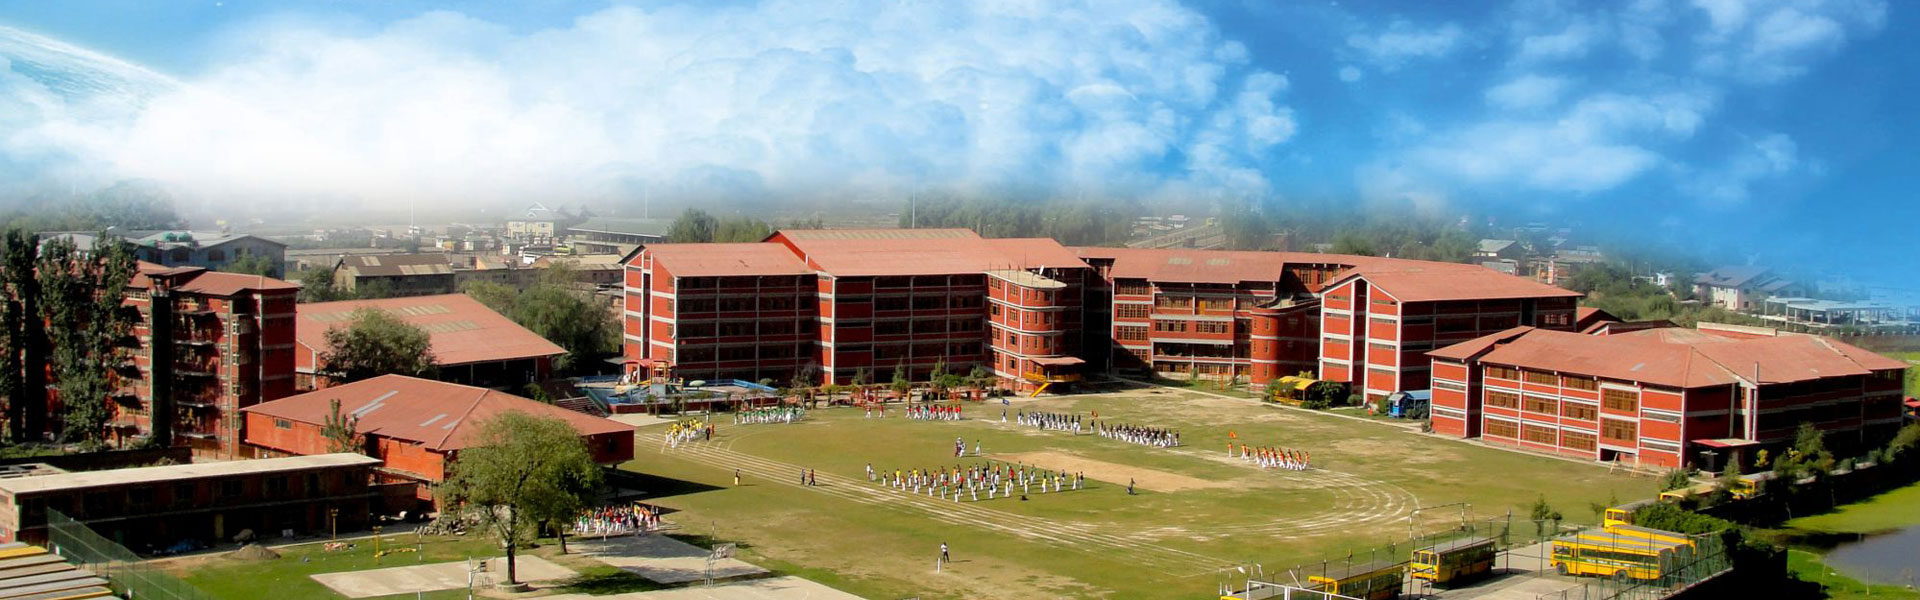 School-Campus